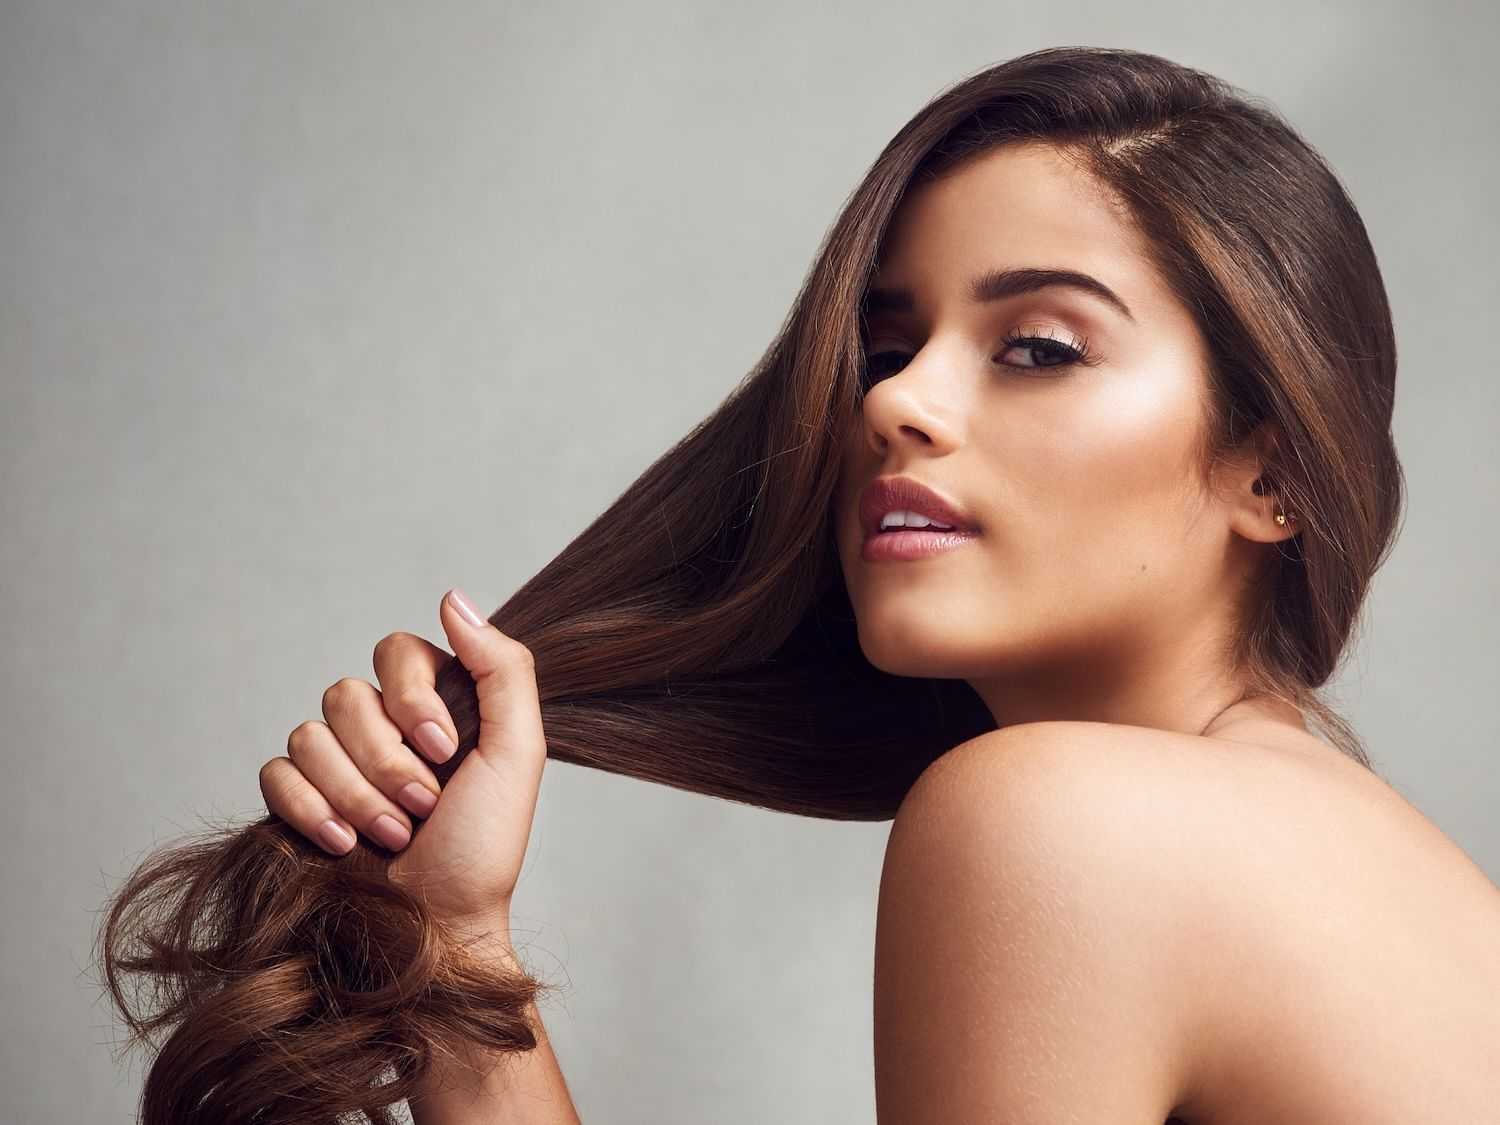 Woman showcasing her long, healthy hair.